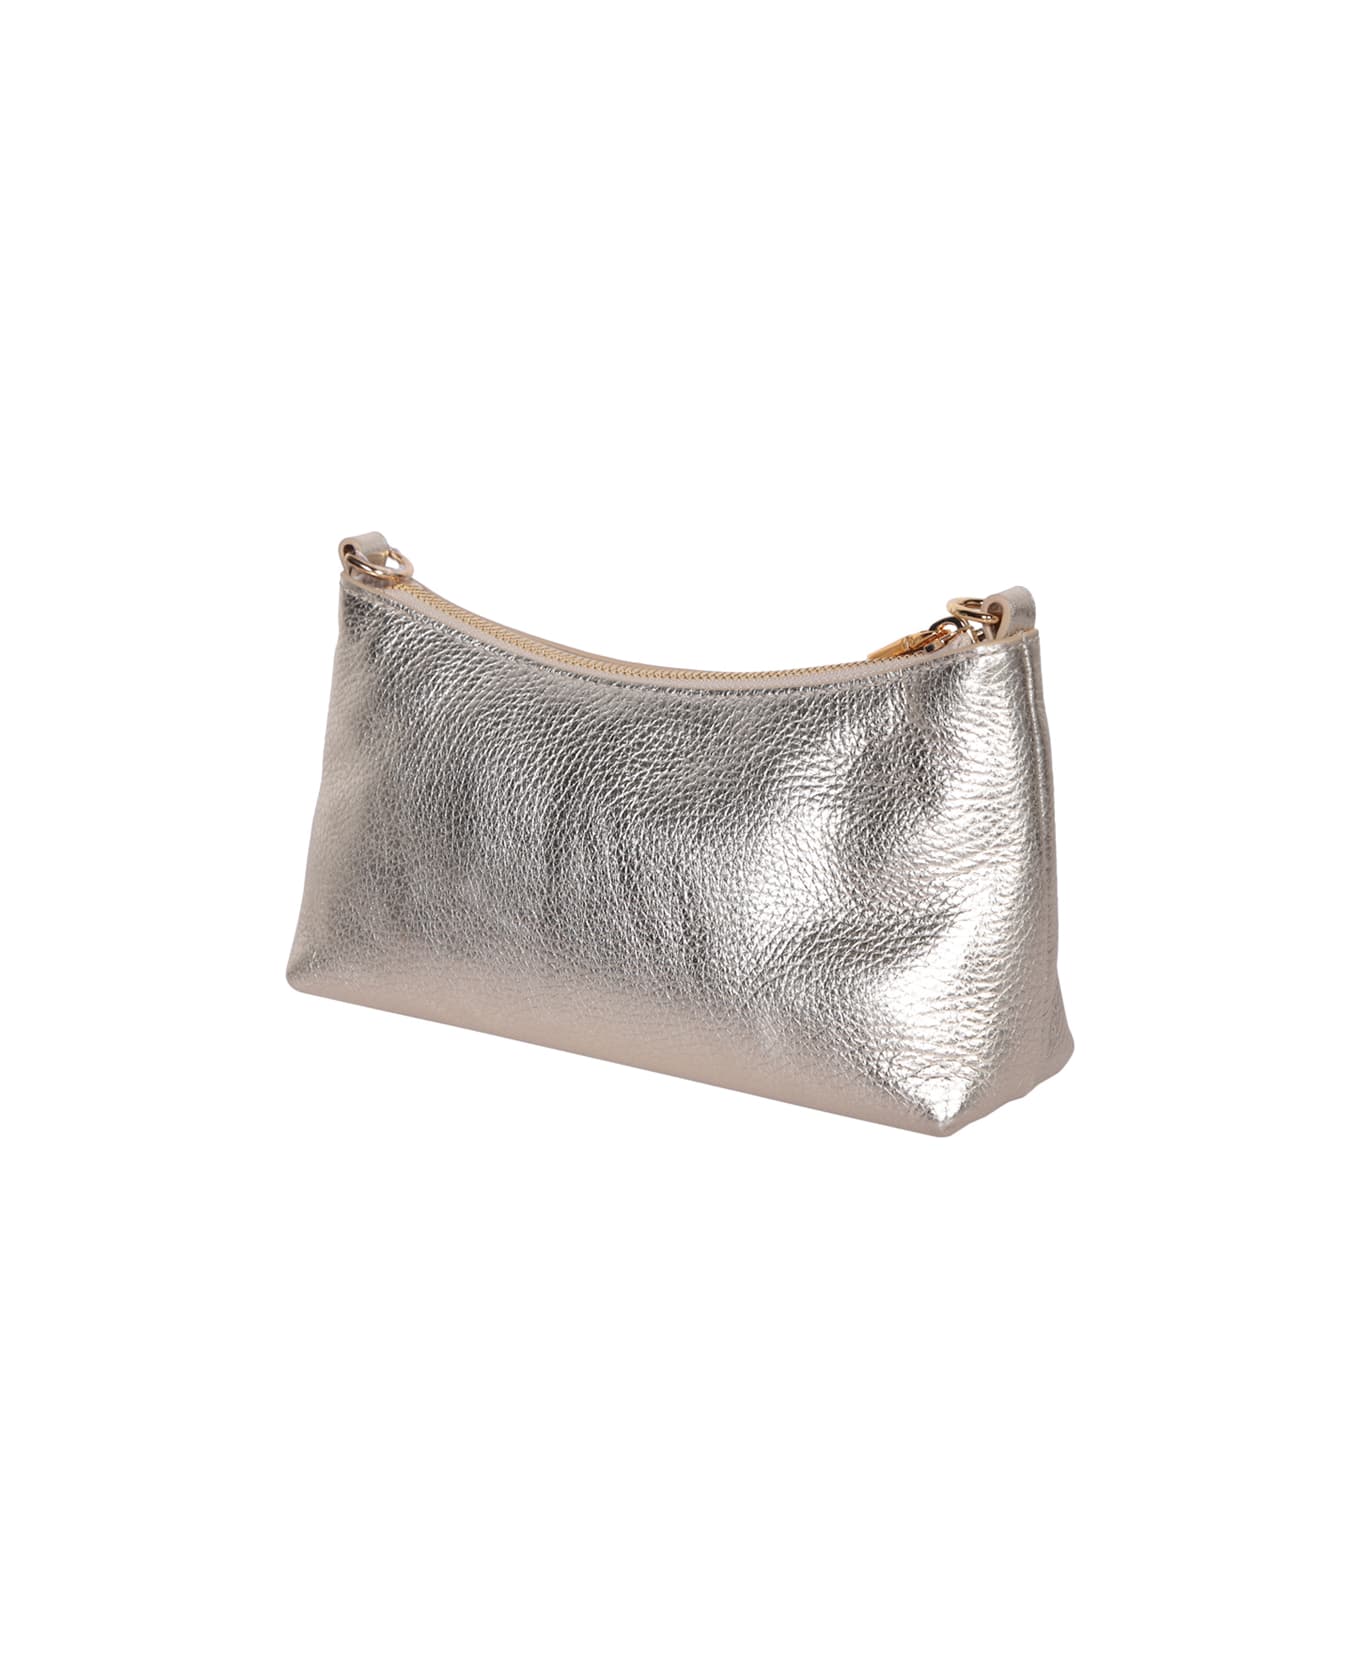 Coccinelle Aura Metallic Gold Leather Bag - Metallic トートバッグ